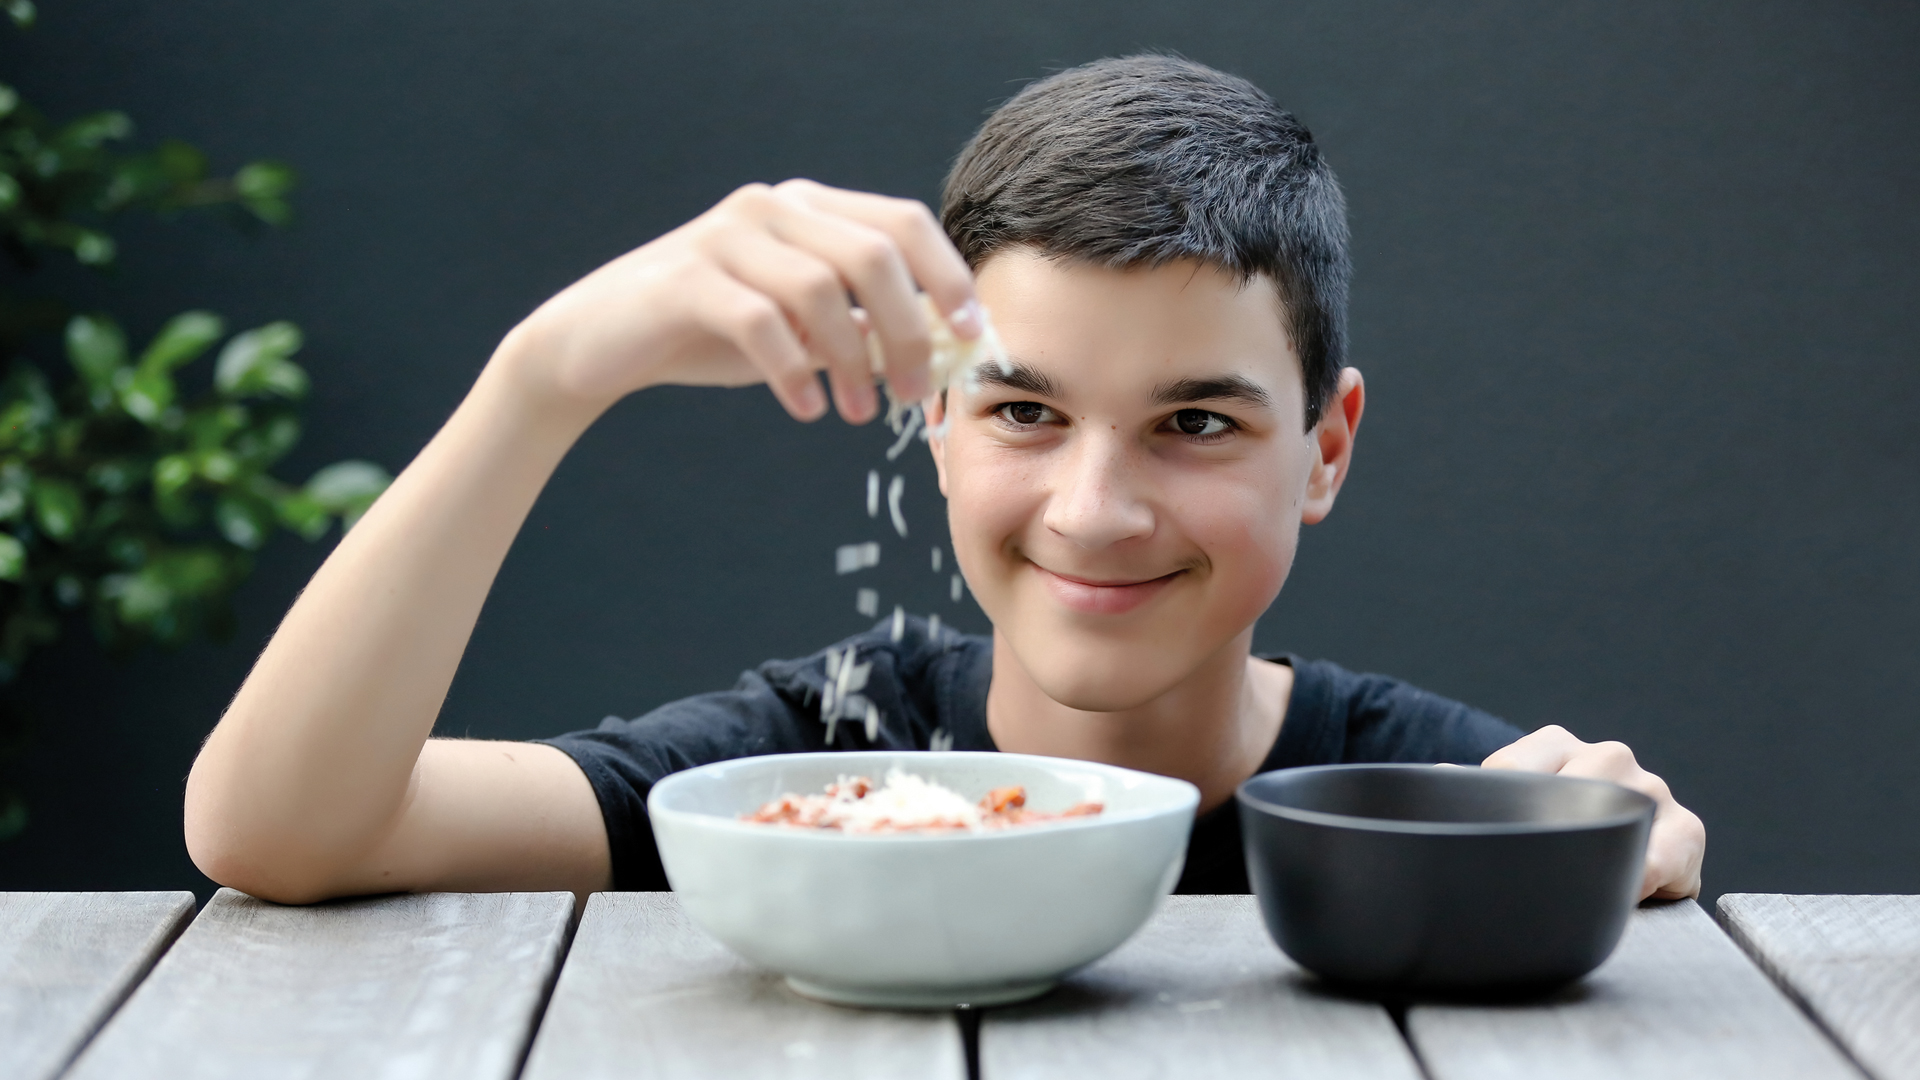 Australian teen Isaac Tulemija on growing up with coeliac disease